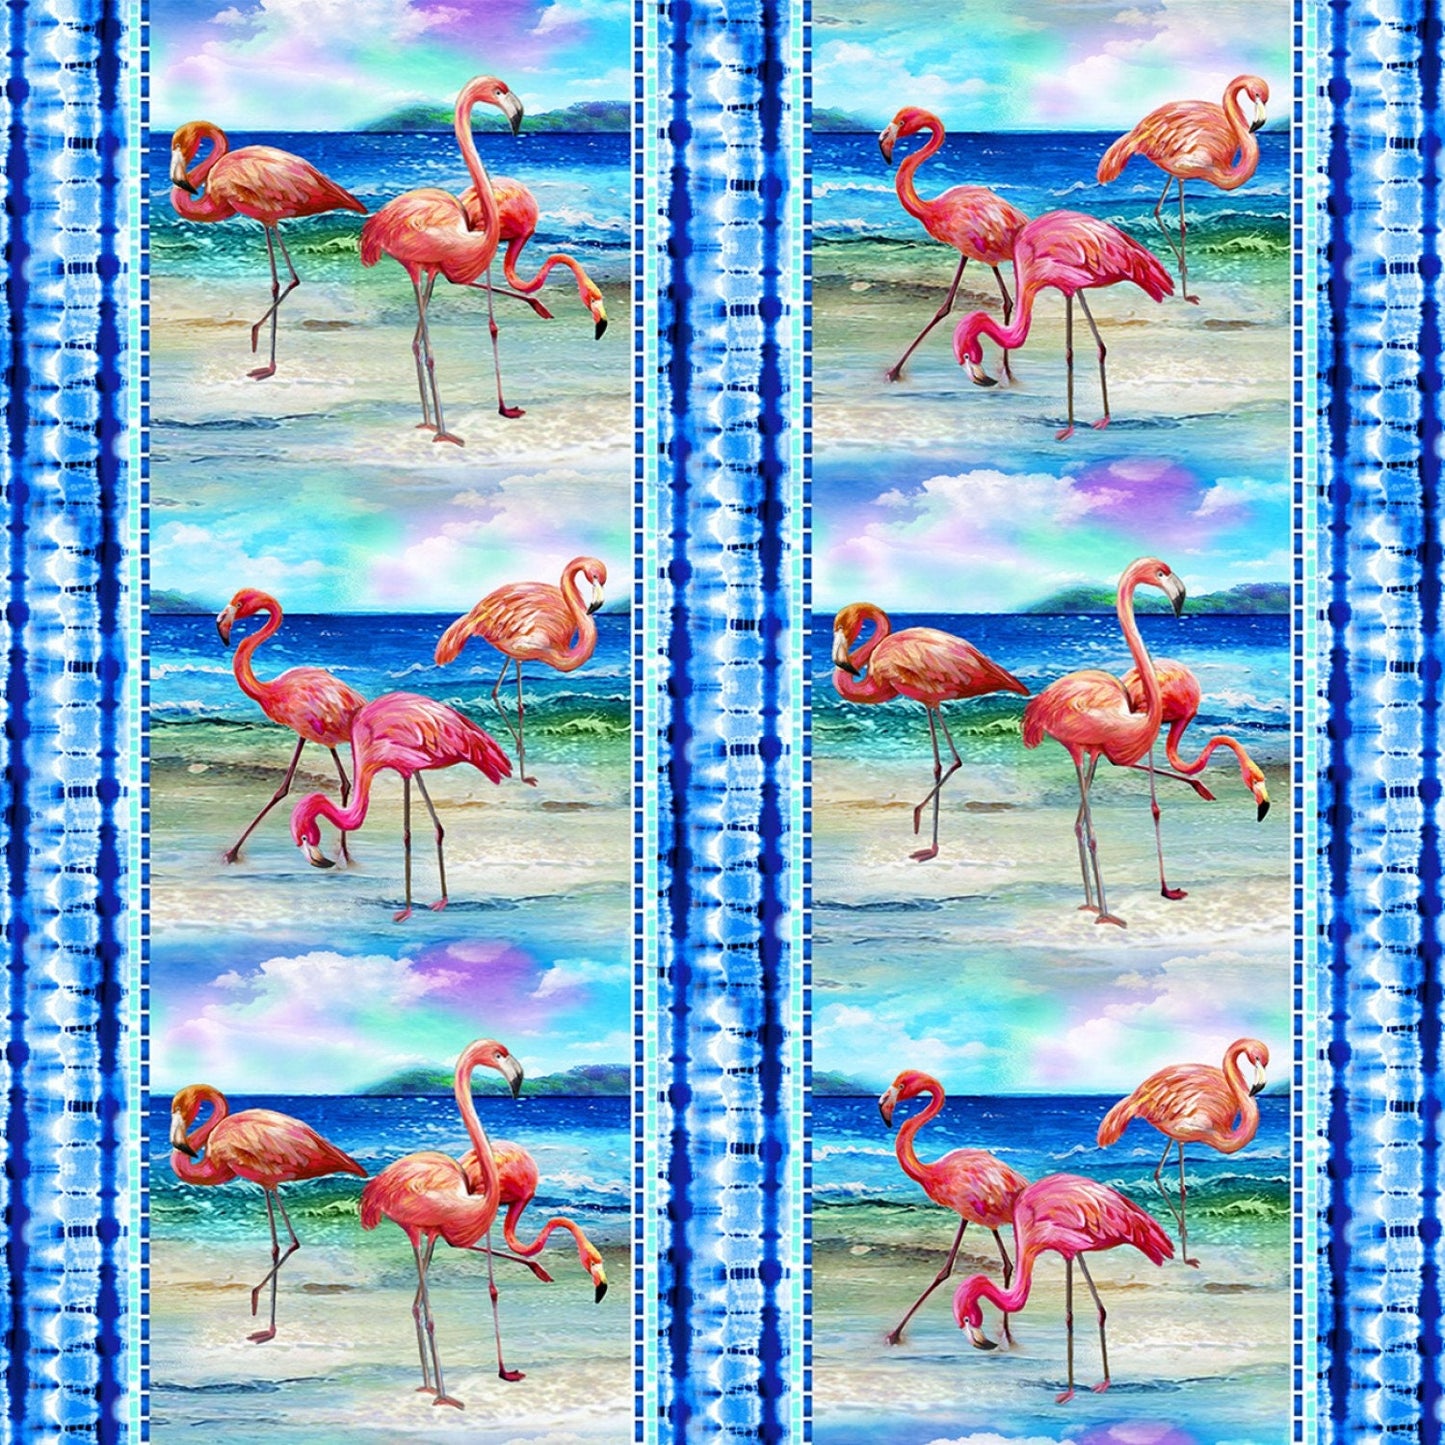 Fabulous Flamingos by Ro Gregg 120-208931 Cotton Woven Fabric